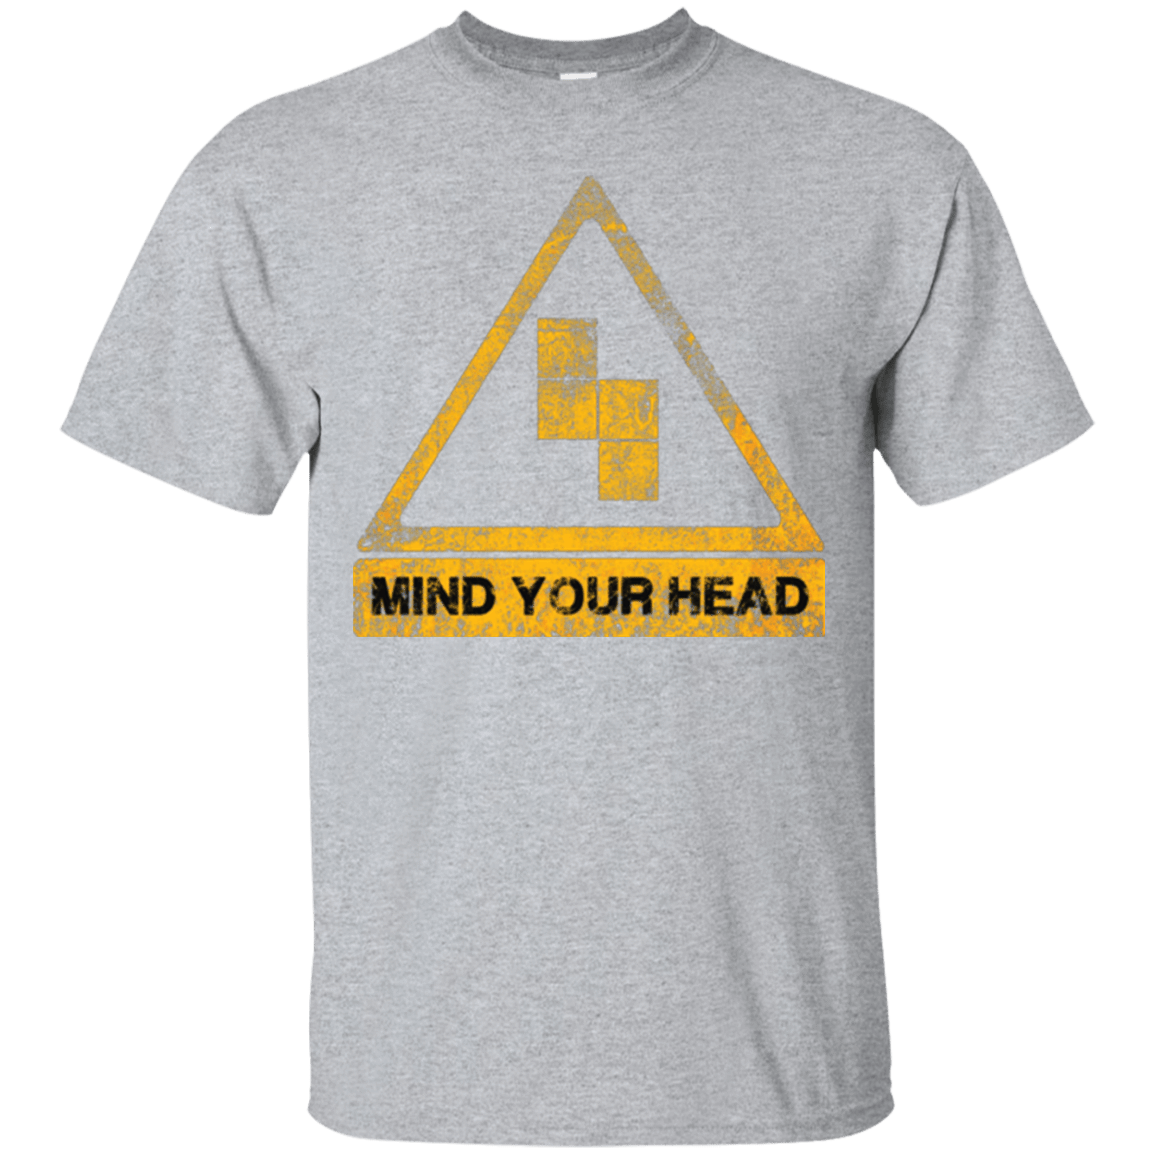 T-Shirts Sport Grey / Small MIND YOUR HEAD T-Shirt